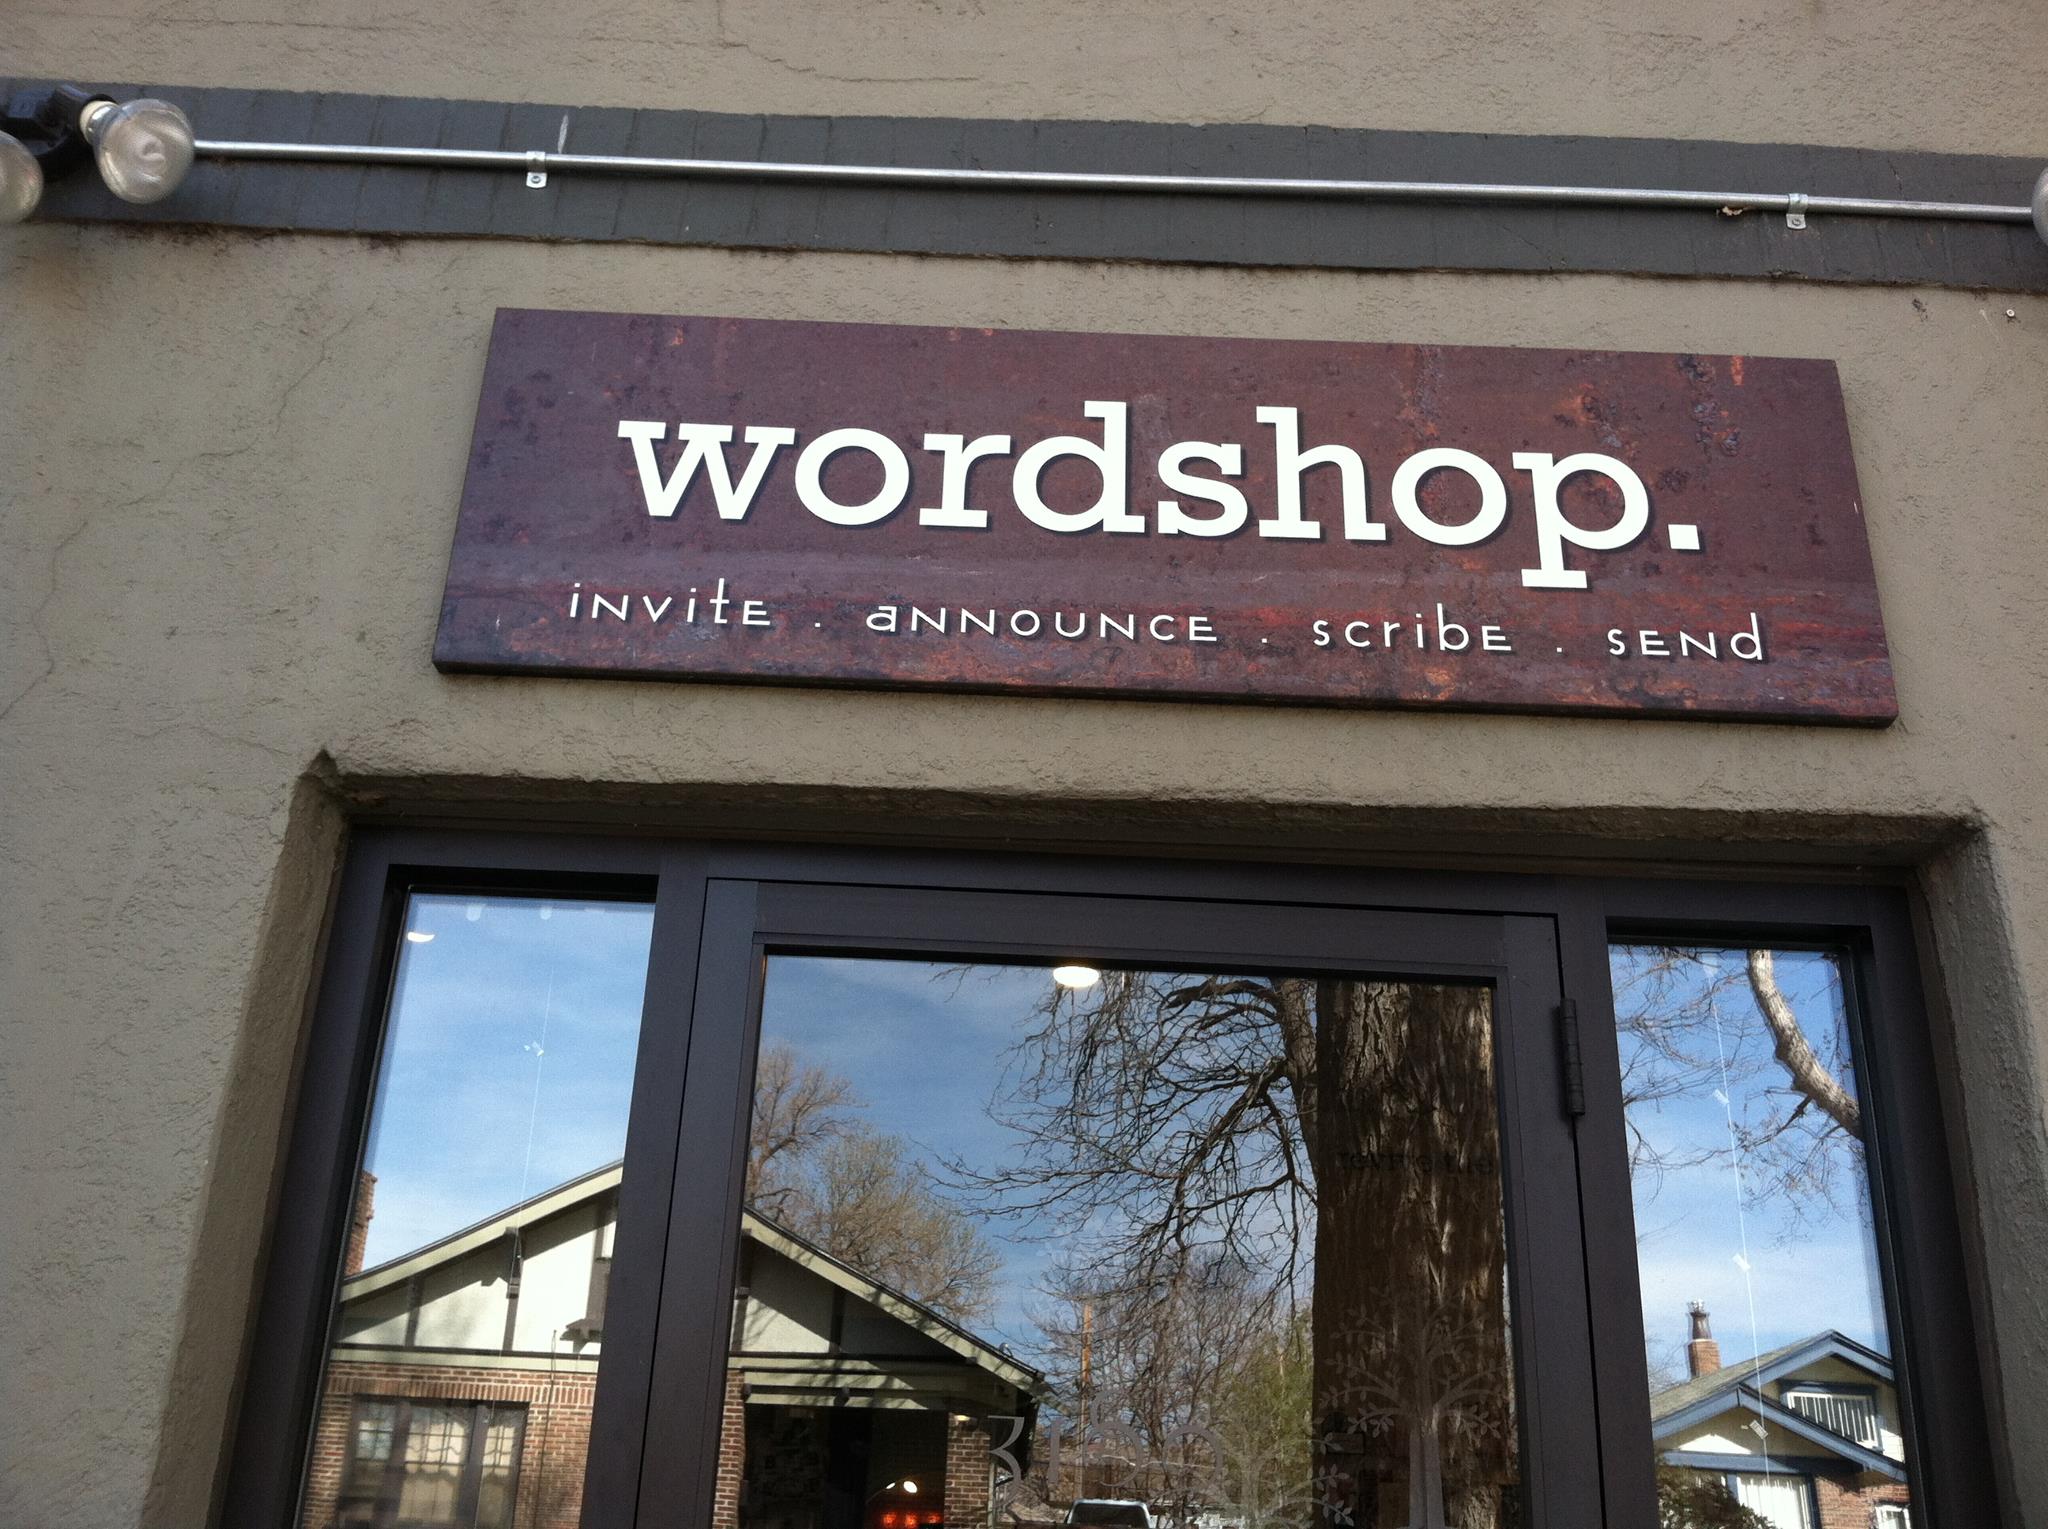 Wordshop stationary store in Denver, CO